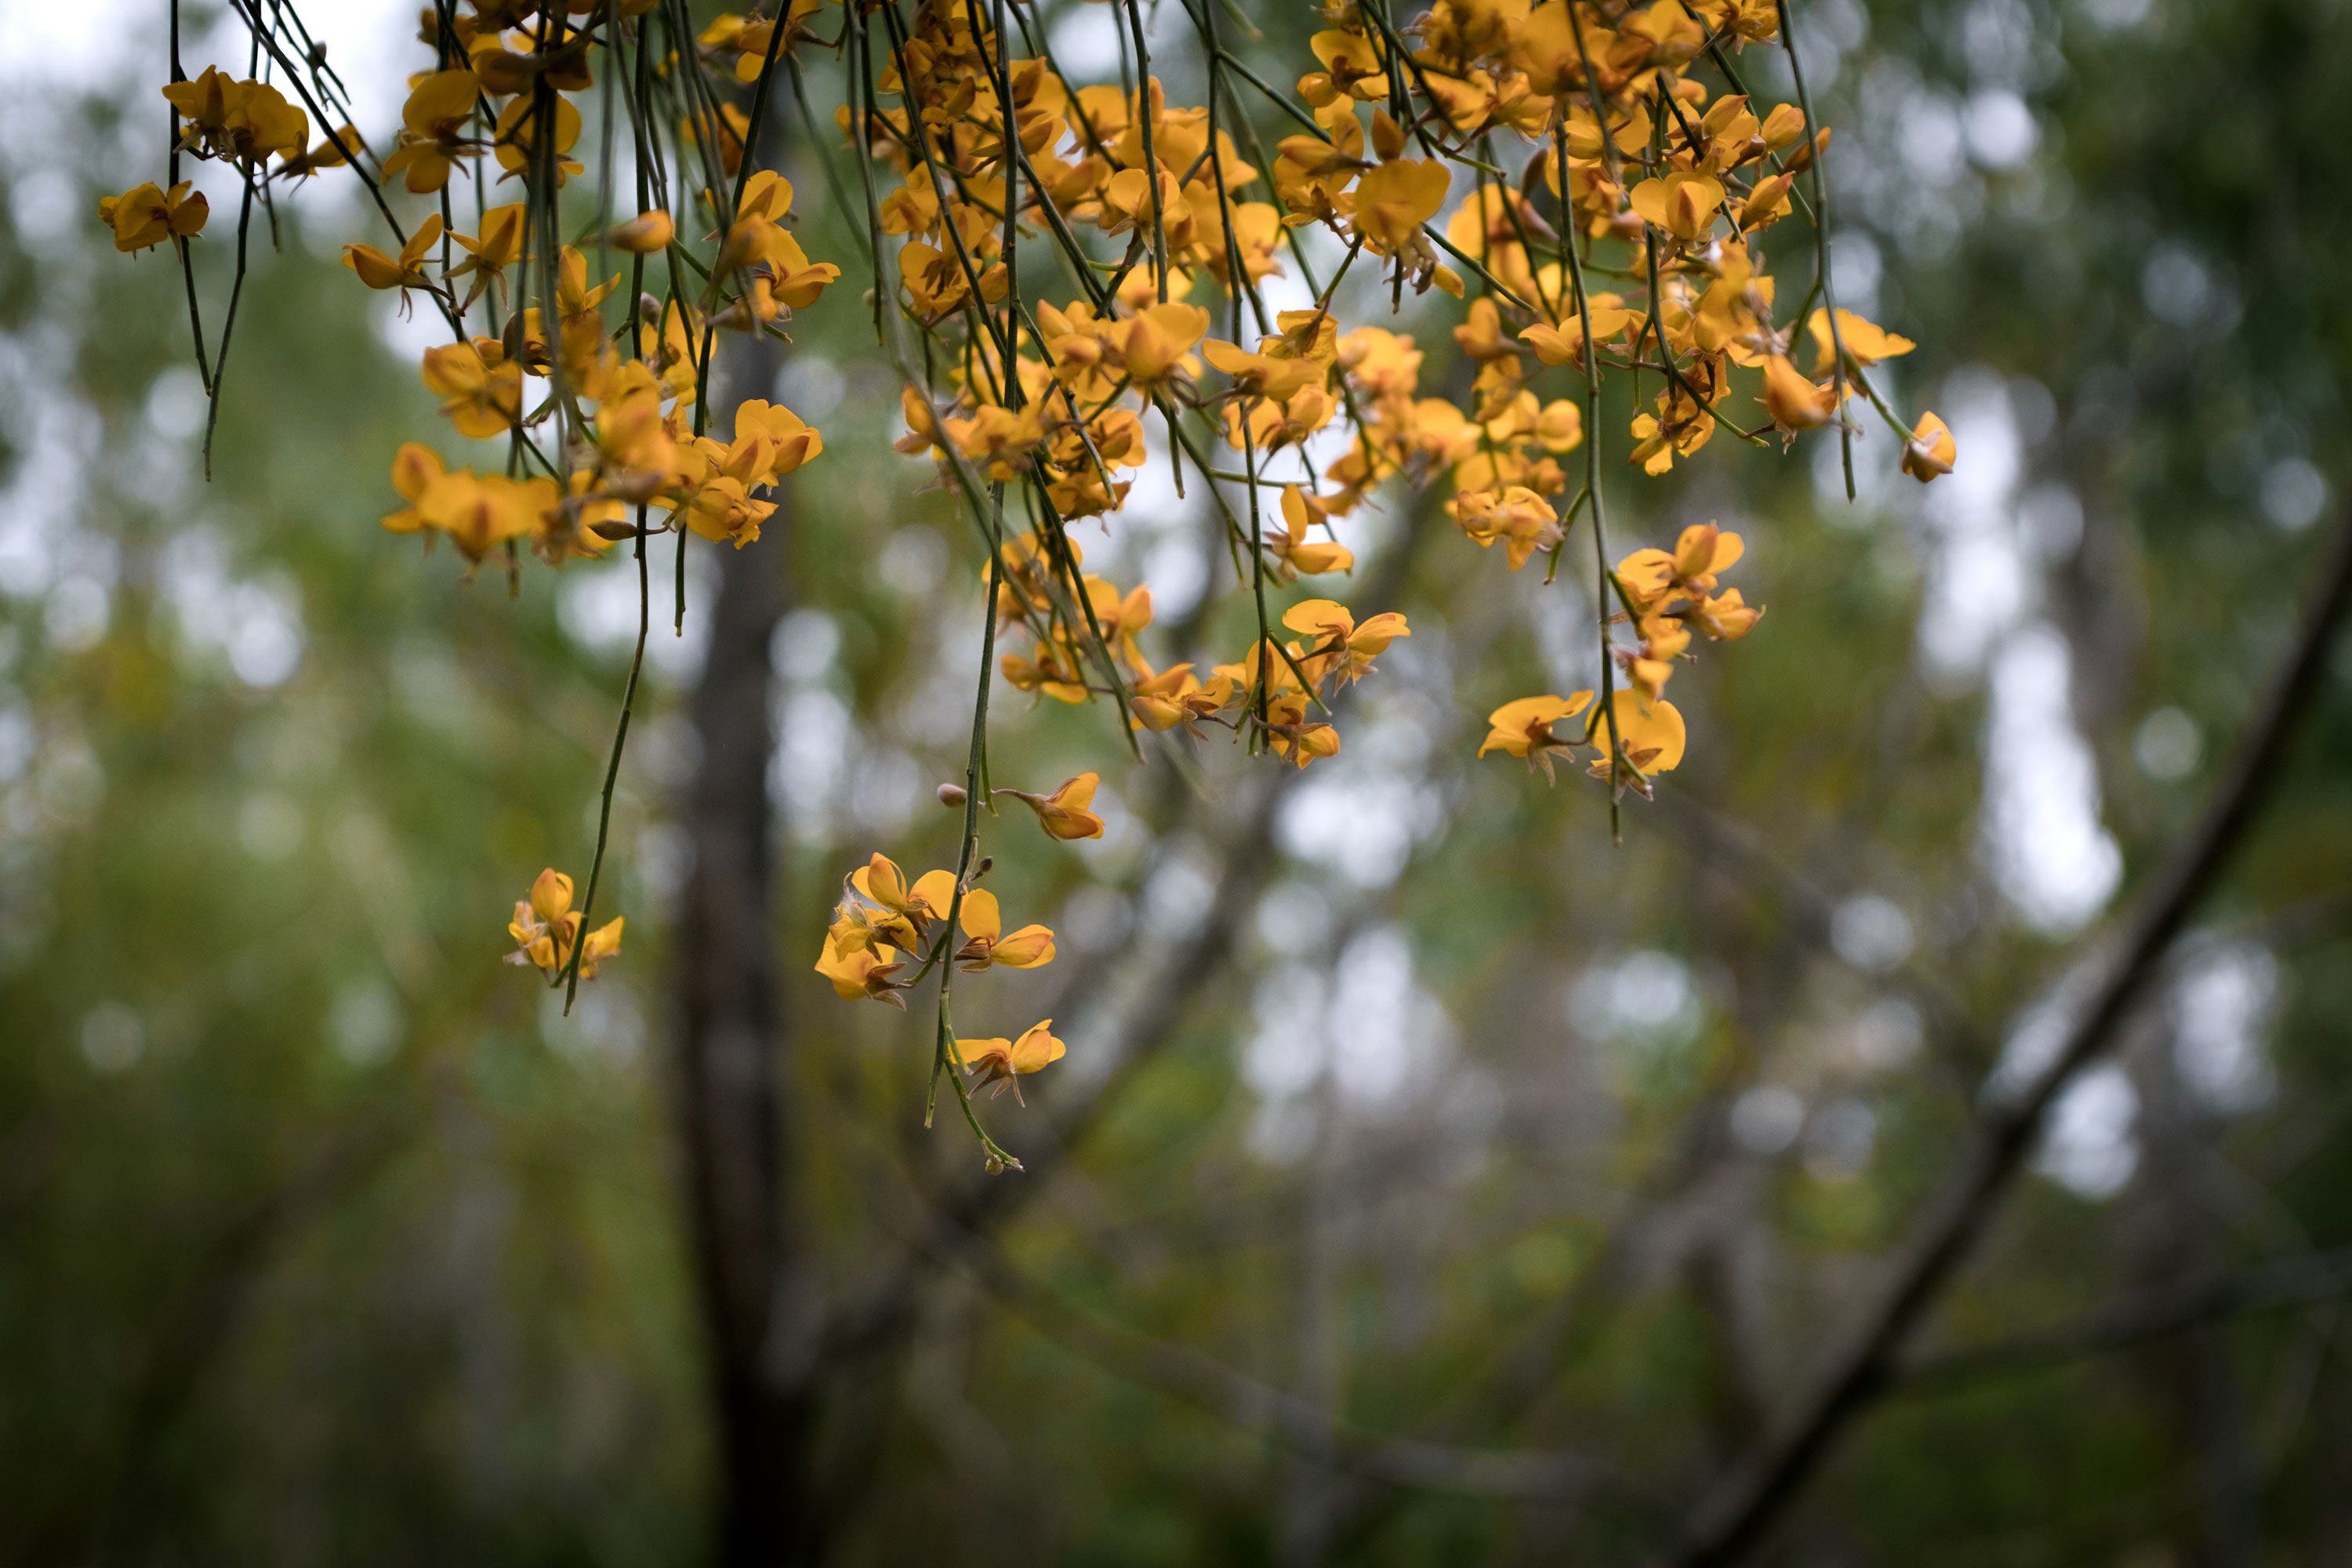 Dogwood, winged broom pea (Jacksonia scoparia) / photograph by Joy Lai, 2020